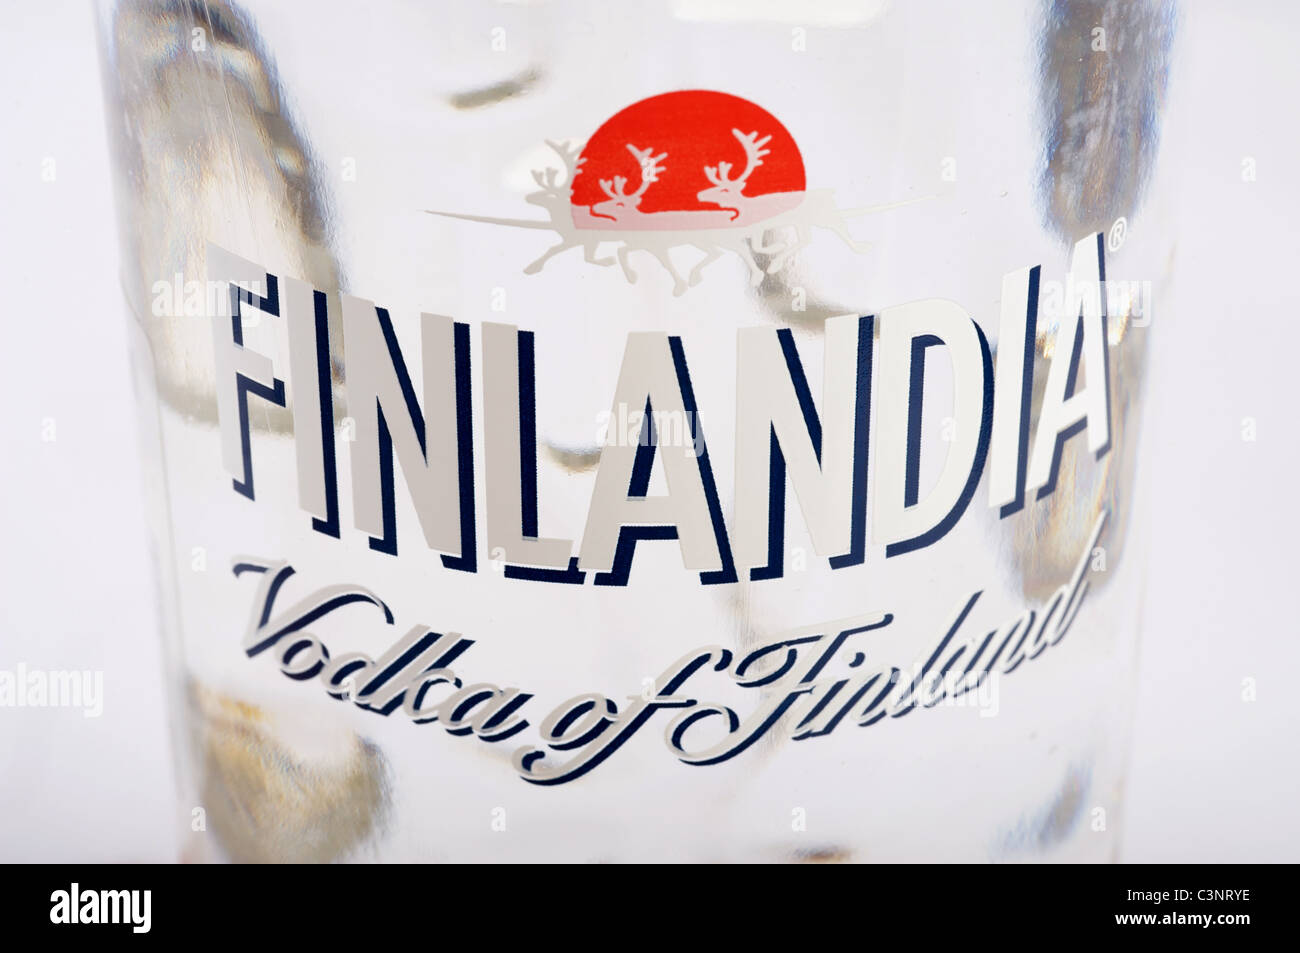 Bottle of Finlandia vodka Stock Photo